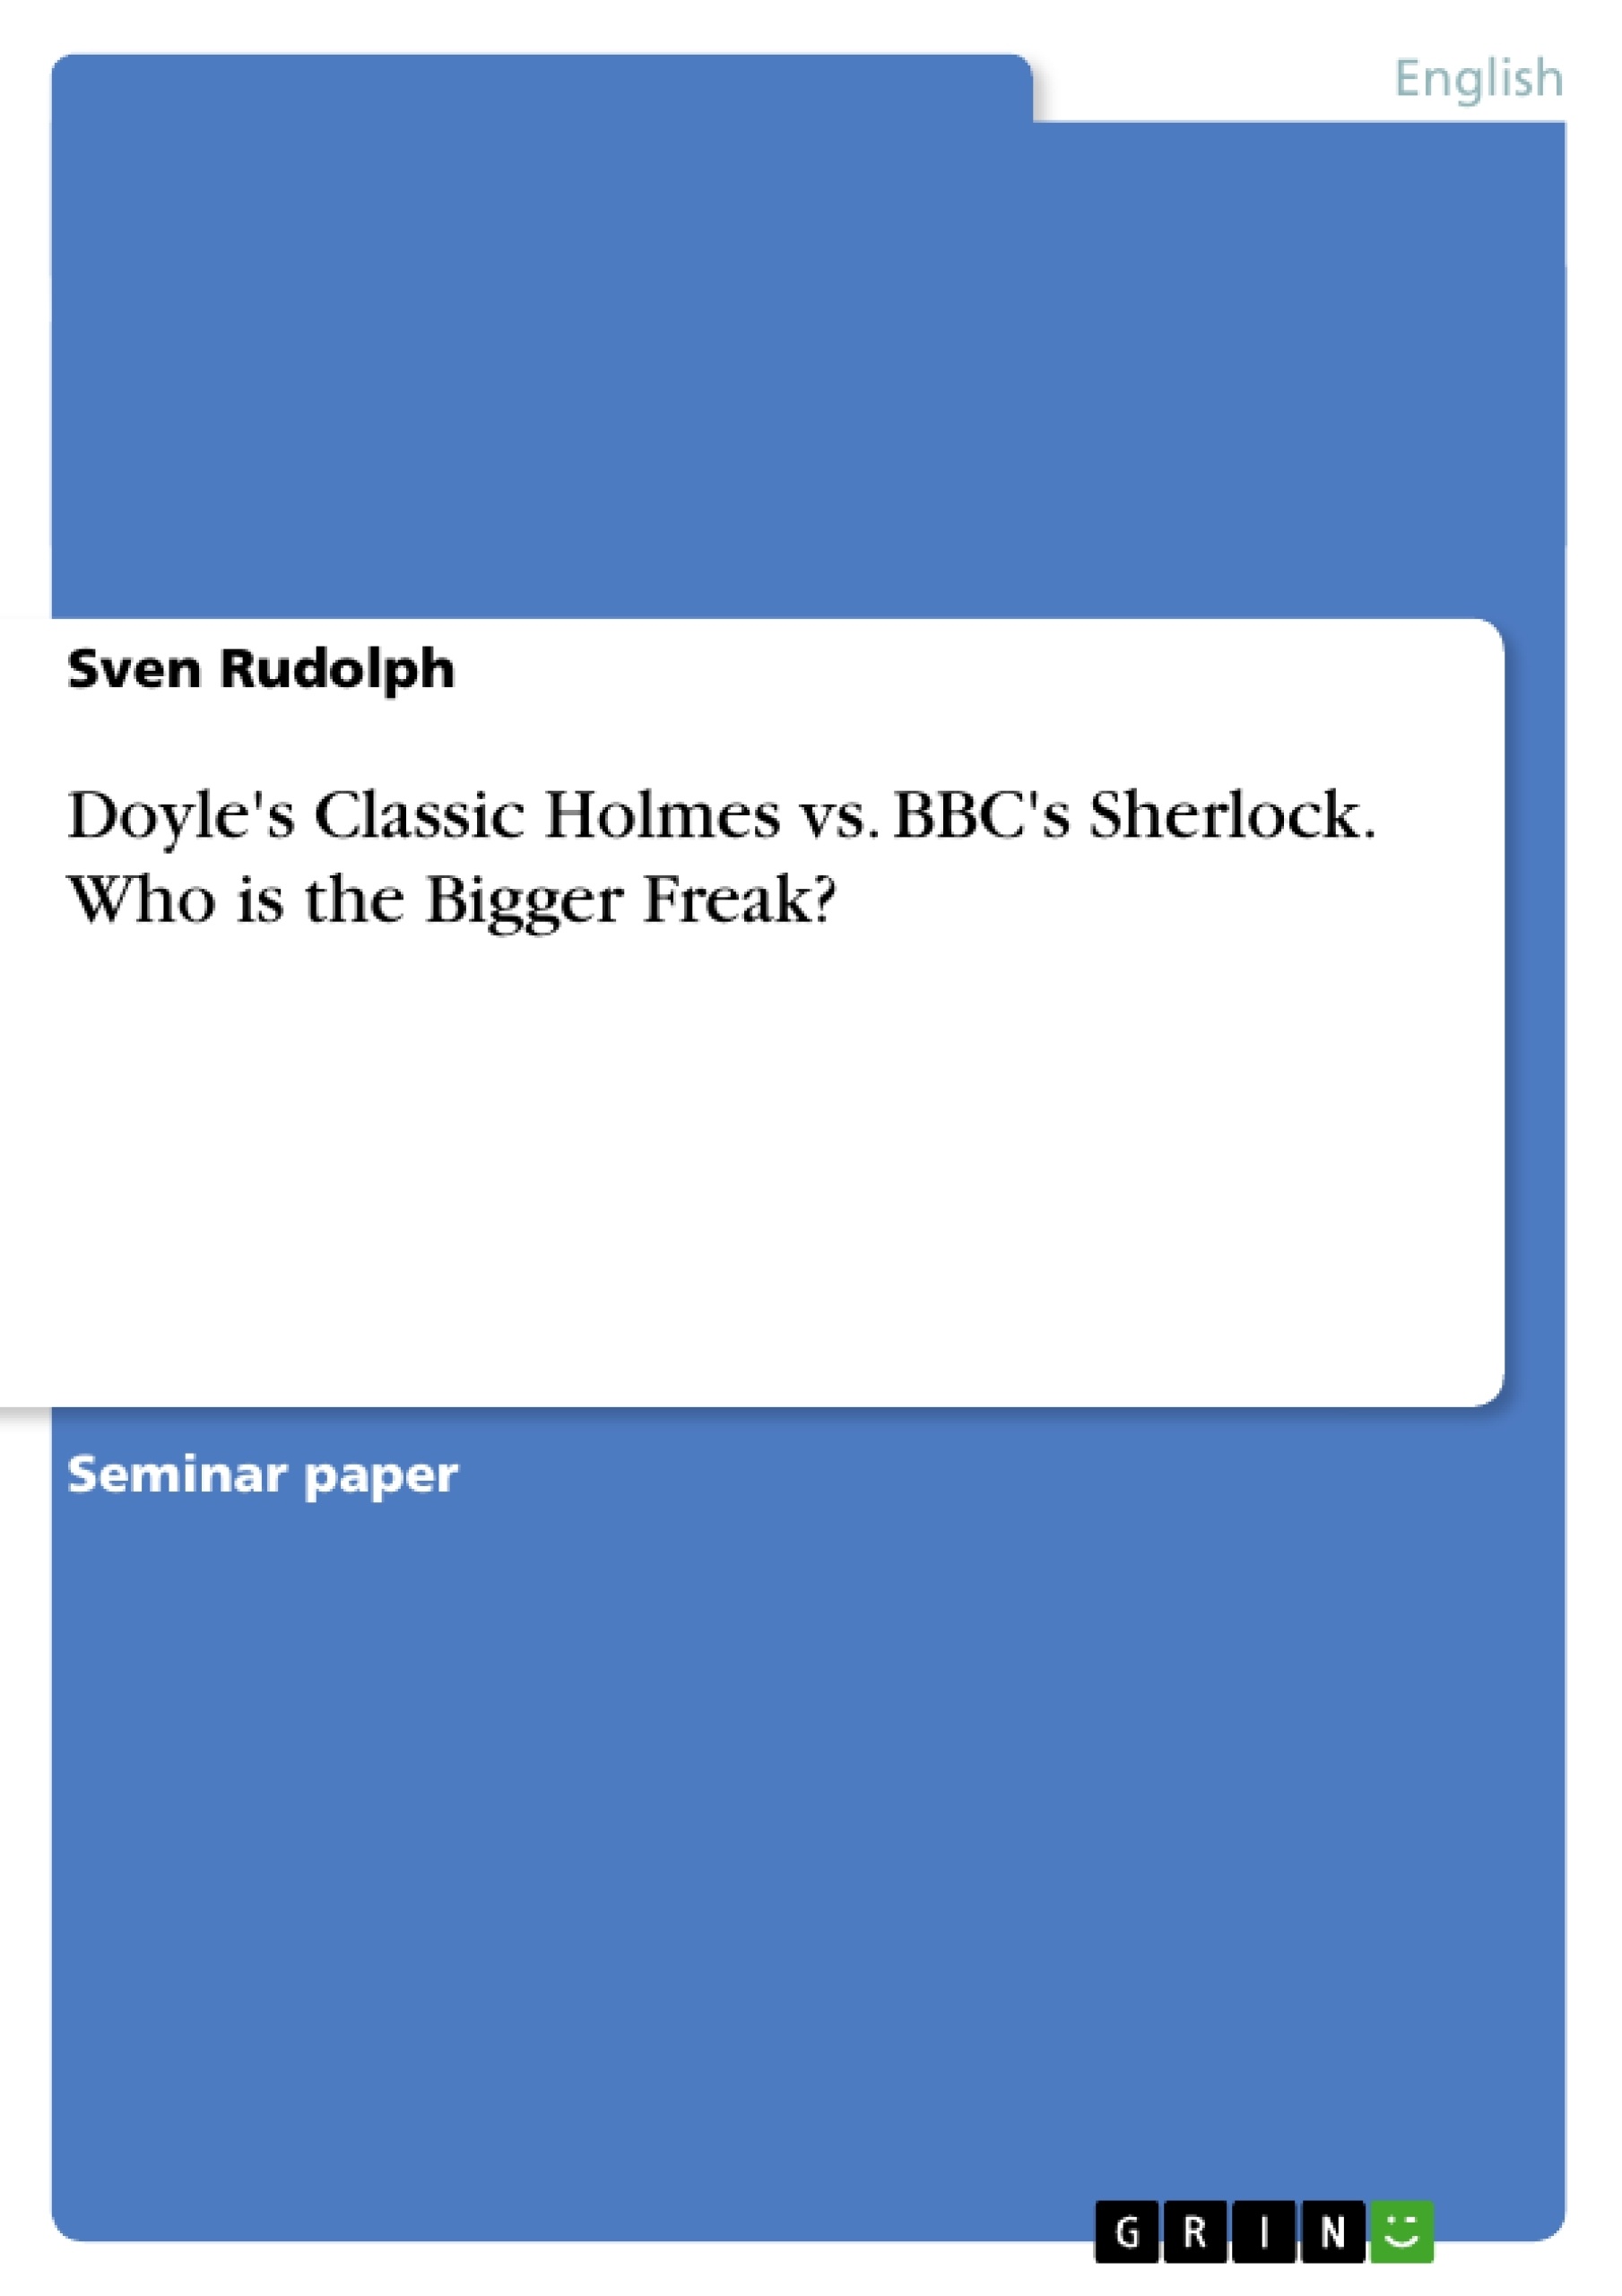 Título: Doyle's Classic Holmes vs. BBC's Sherlock. Who is the Bigger Freak?